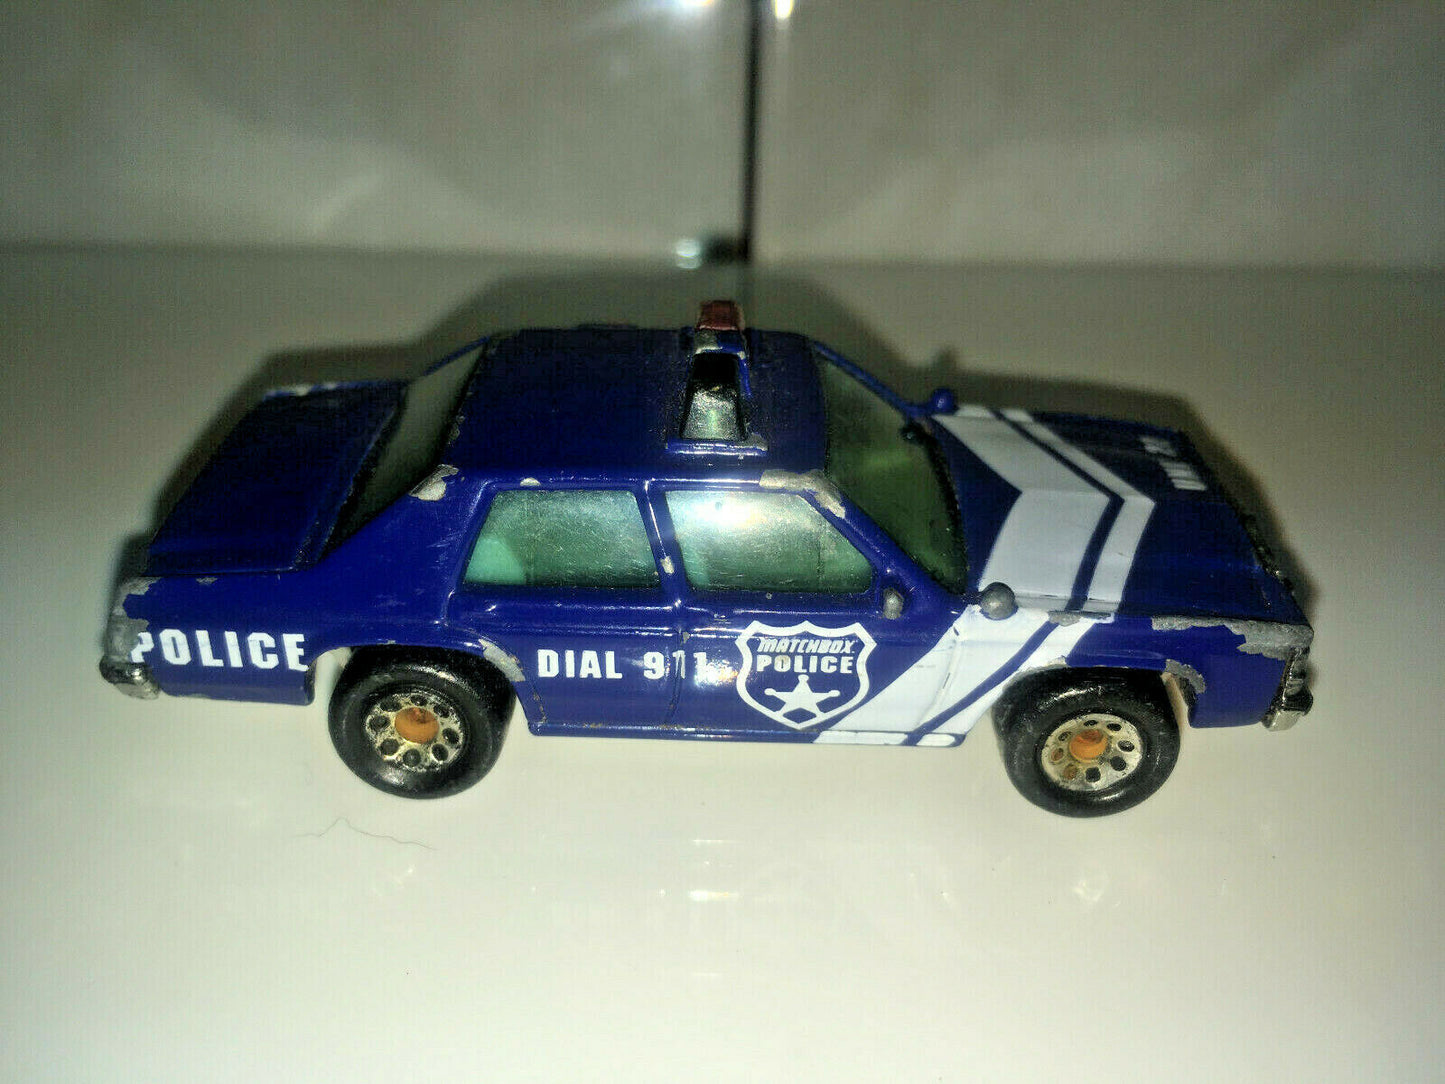 RARE VINTAGE 1987 Matchbox Ford Police Car Unit #22